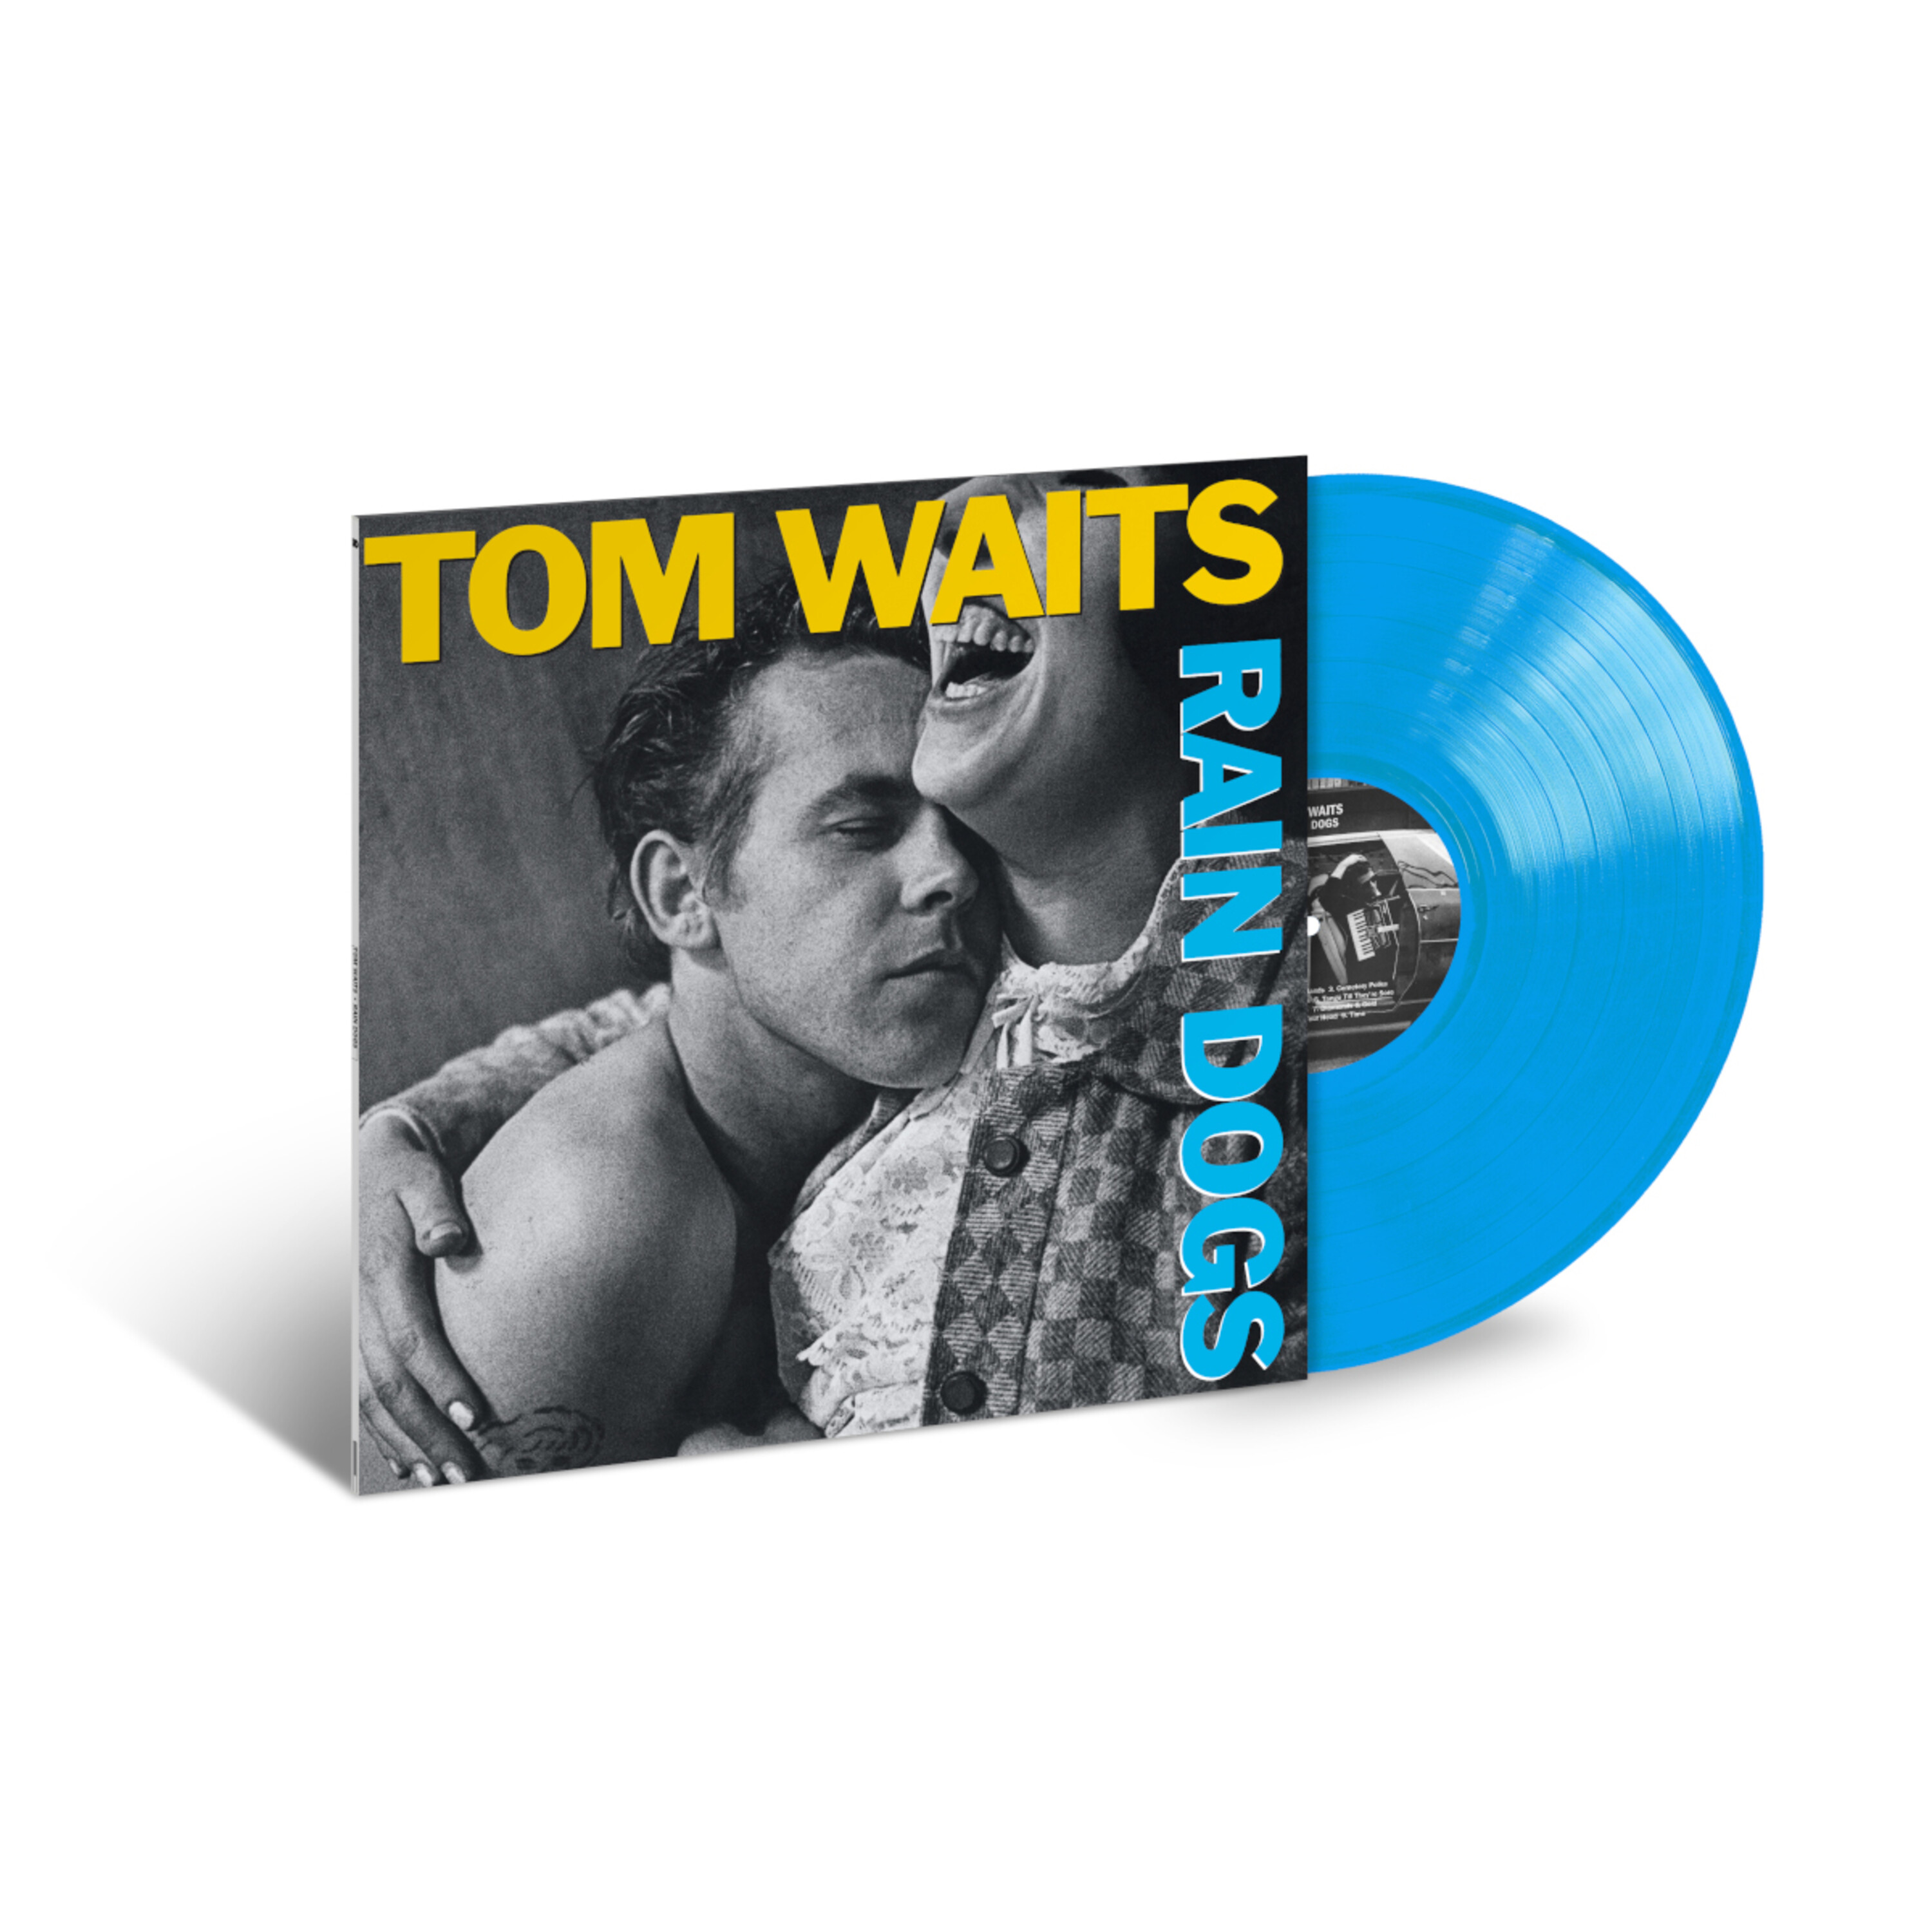 Tom Waits - Rain Dogs, Bone Machine uvm.